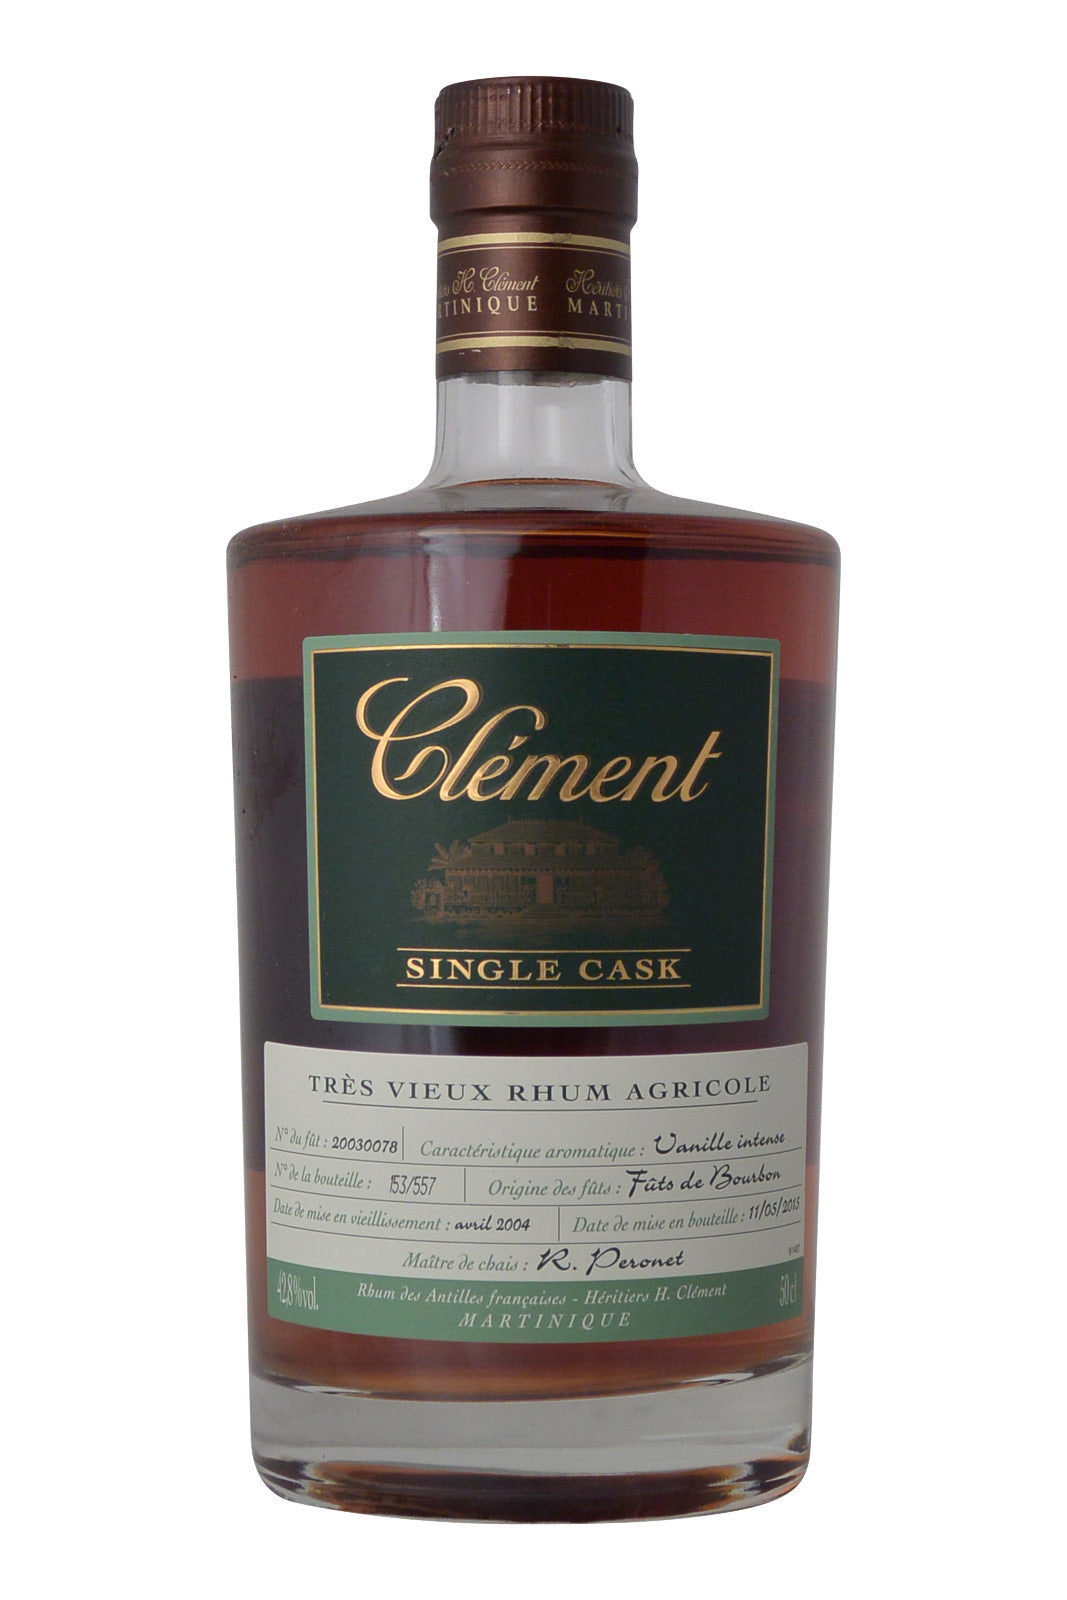 Clement Single Cask Rum 42.8% avril 2004 Vanille Intense